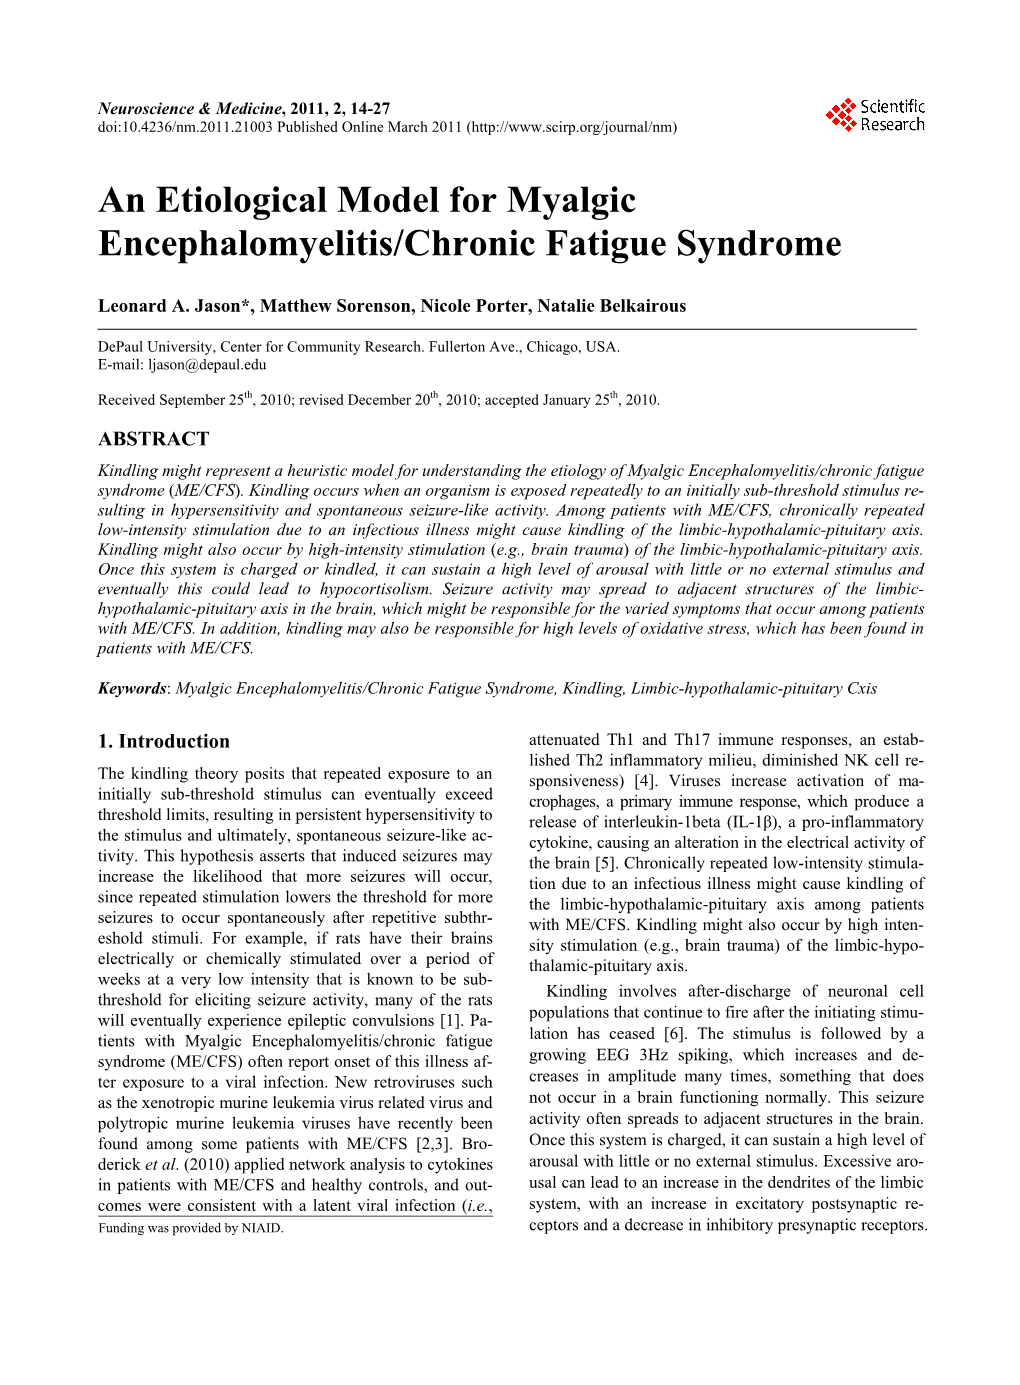 An Etiological Model for Myalgic Encephalomyelitis/Chronic Fatigue Syndrome